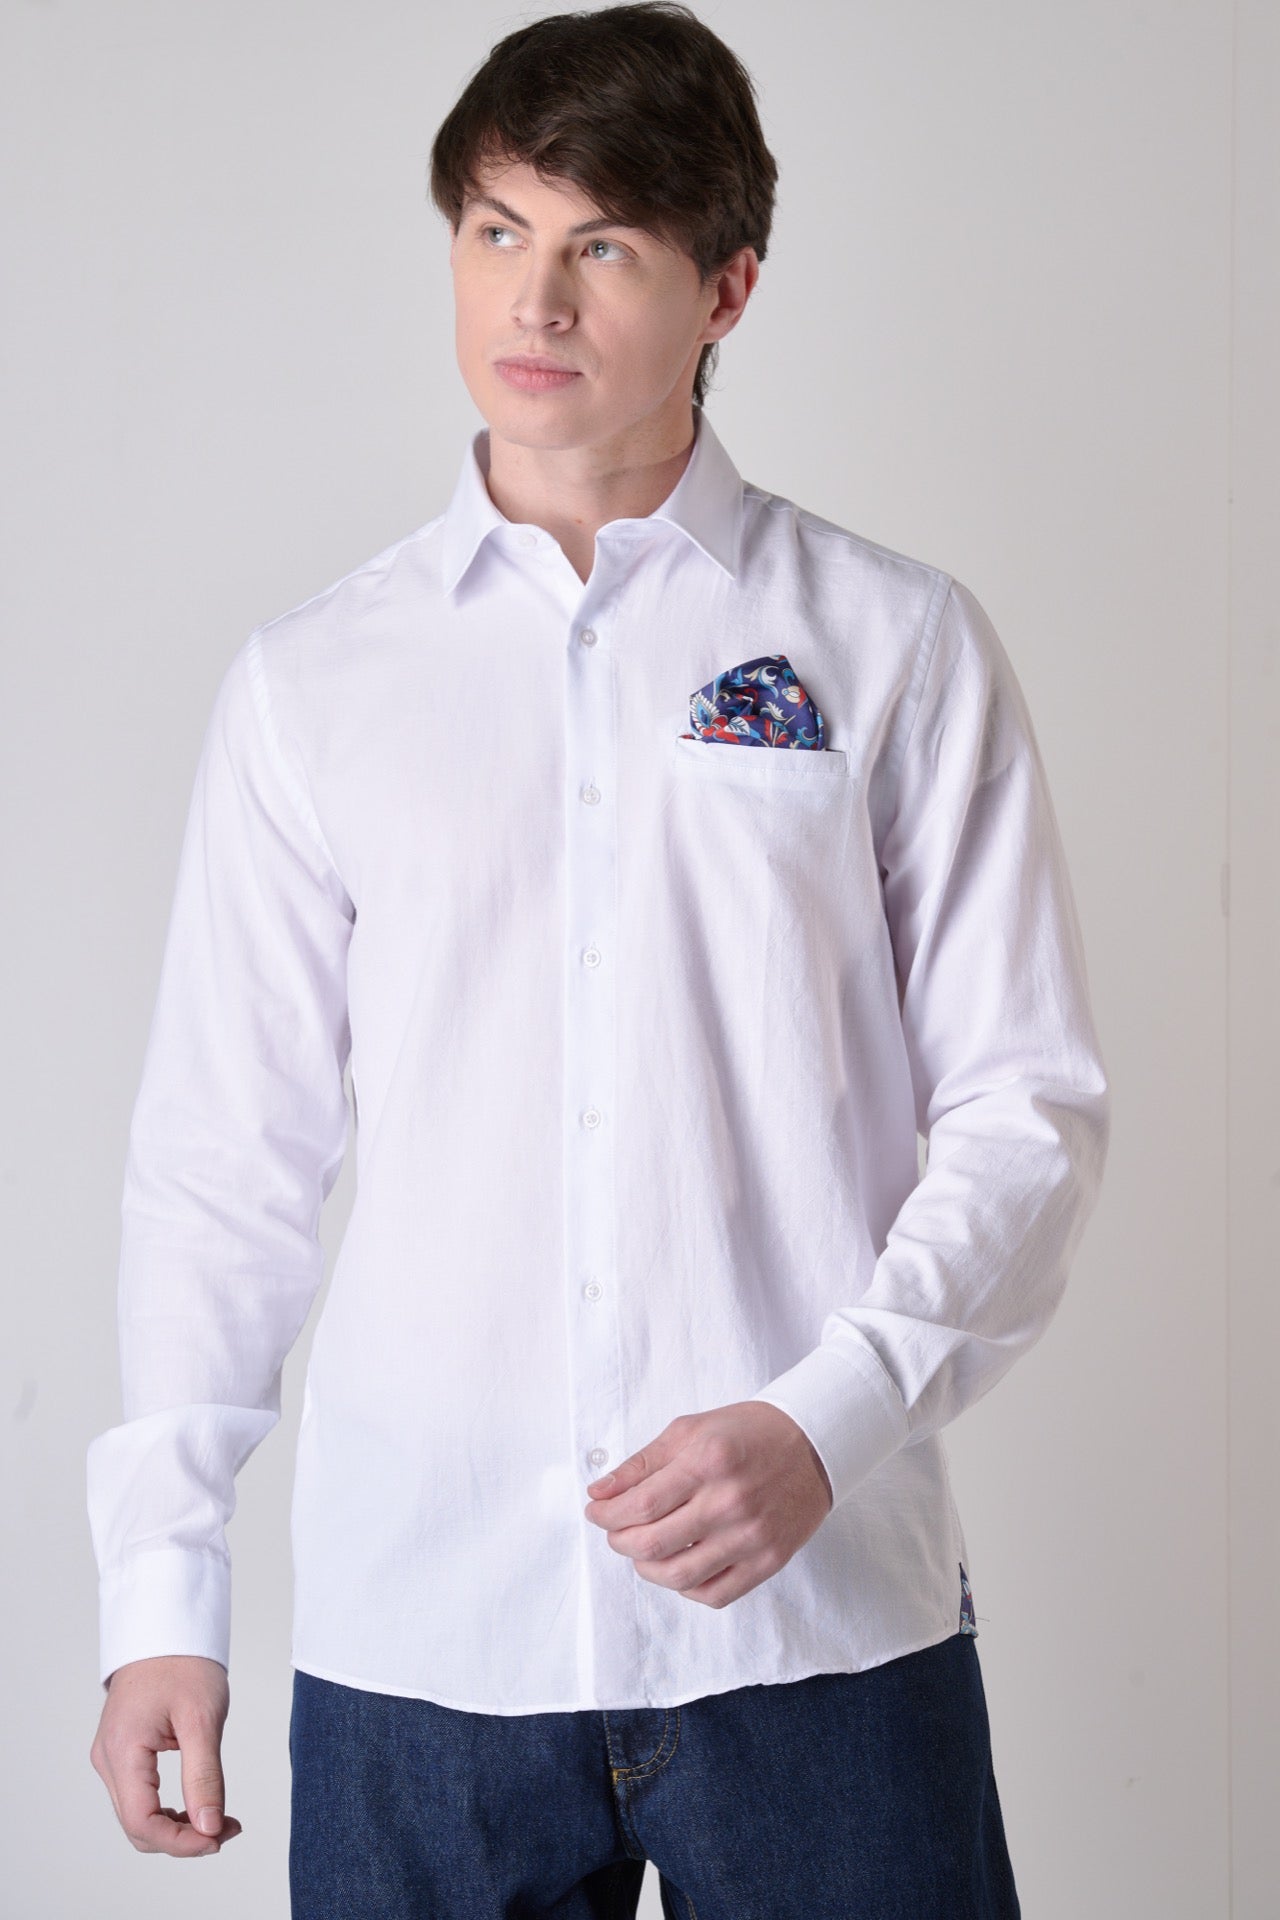 White shirt with pocket square and V2 fabric interior